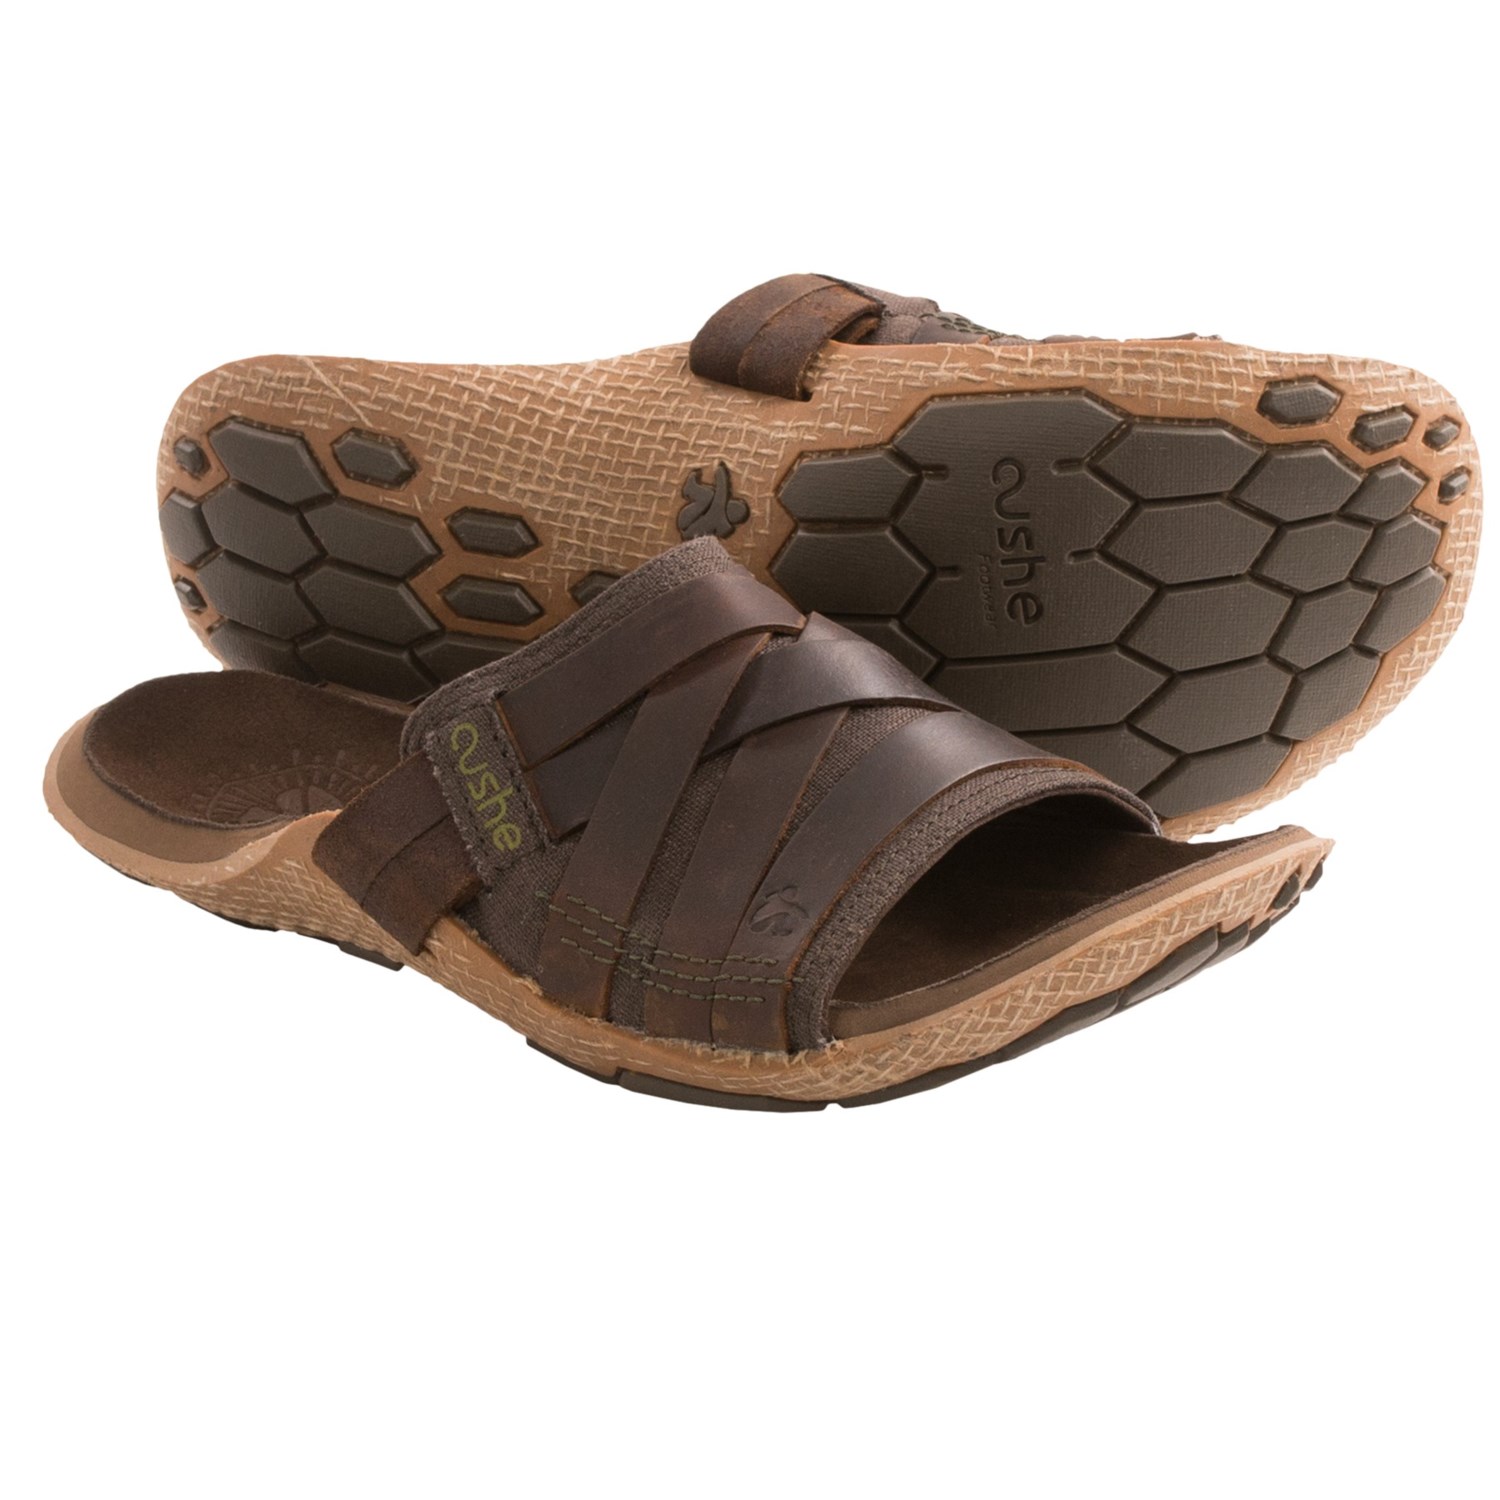 Cushe Manuka Strap Sandals (For Men) 8477W - Save 75%